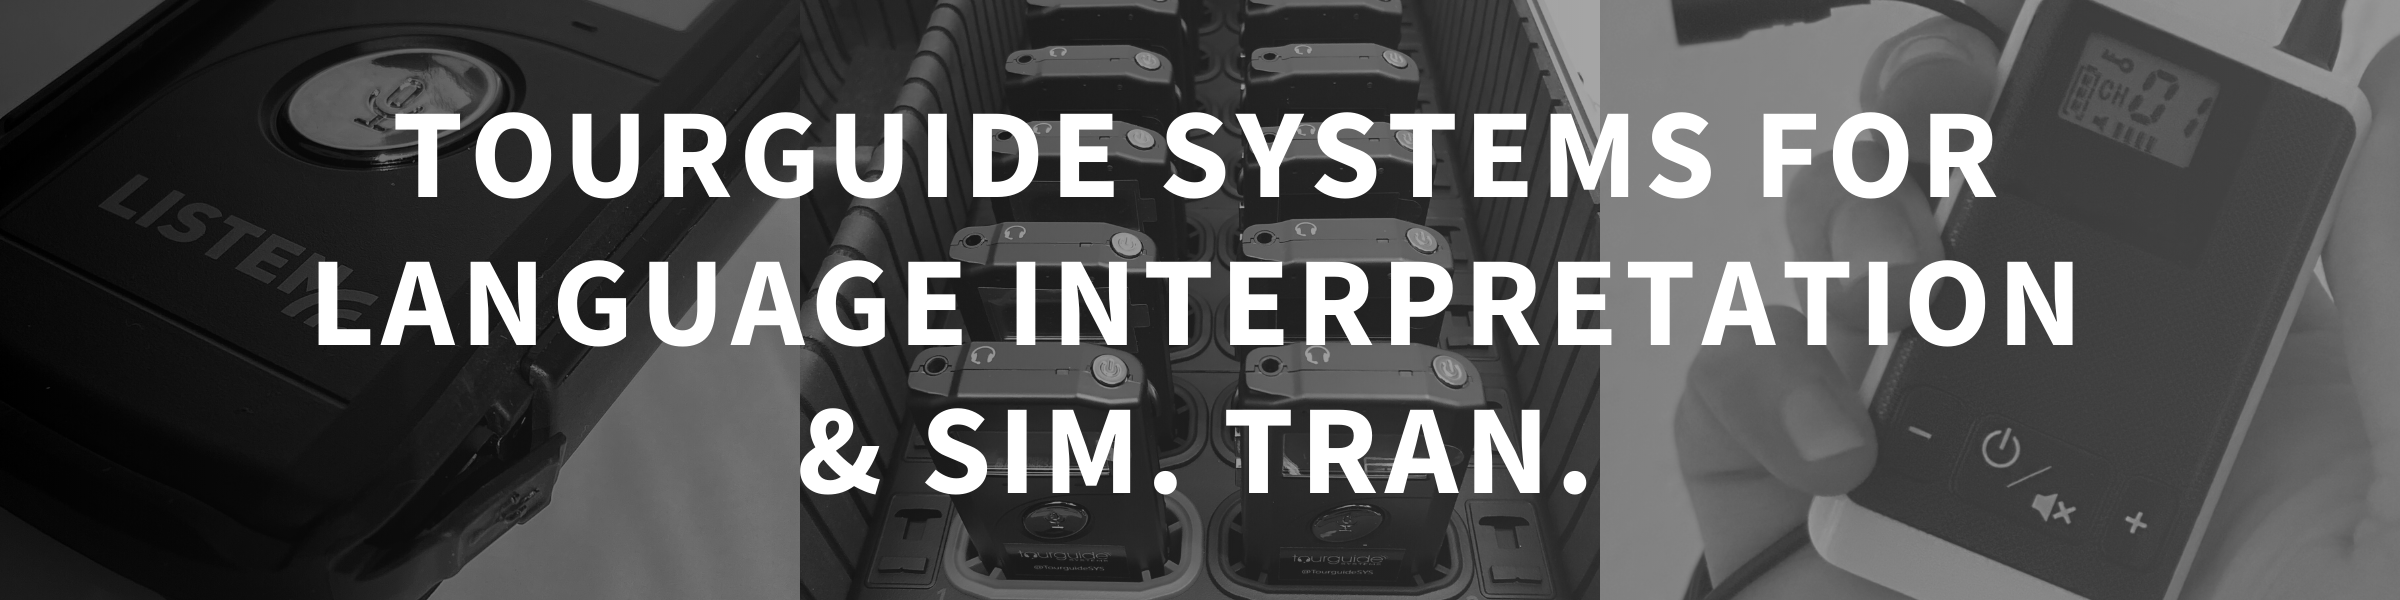 Tourguide Systems for Language Interpretation & Sim. Tran.